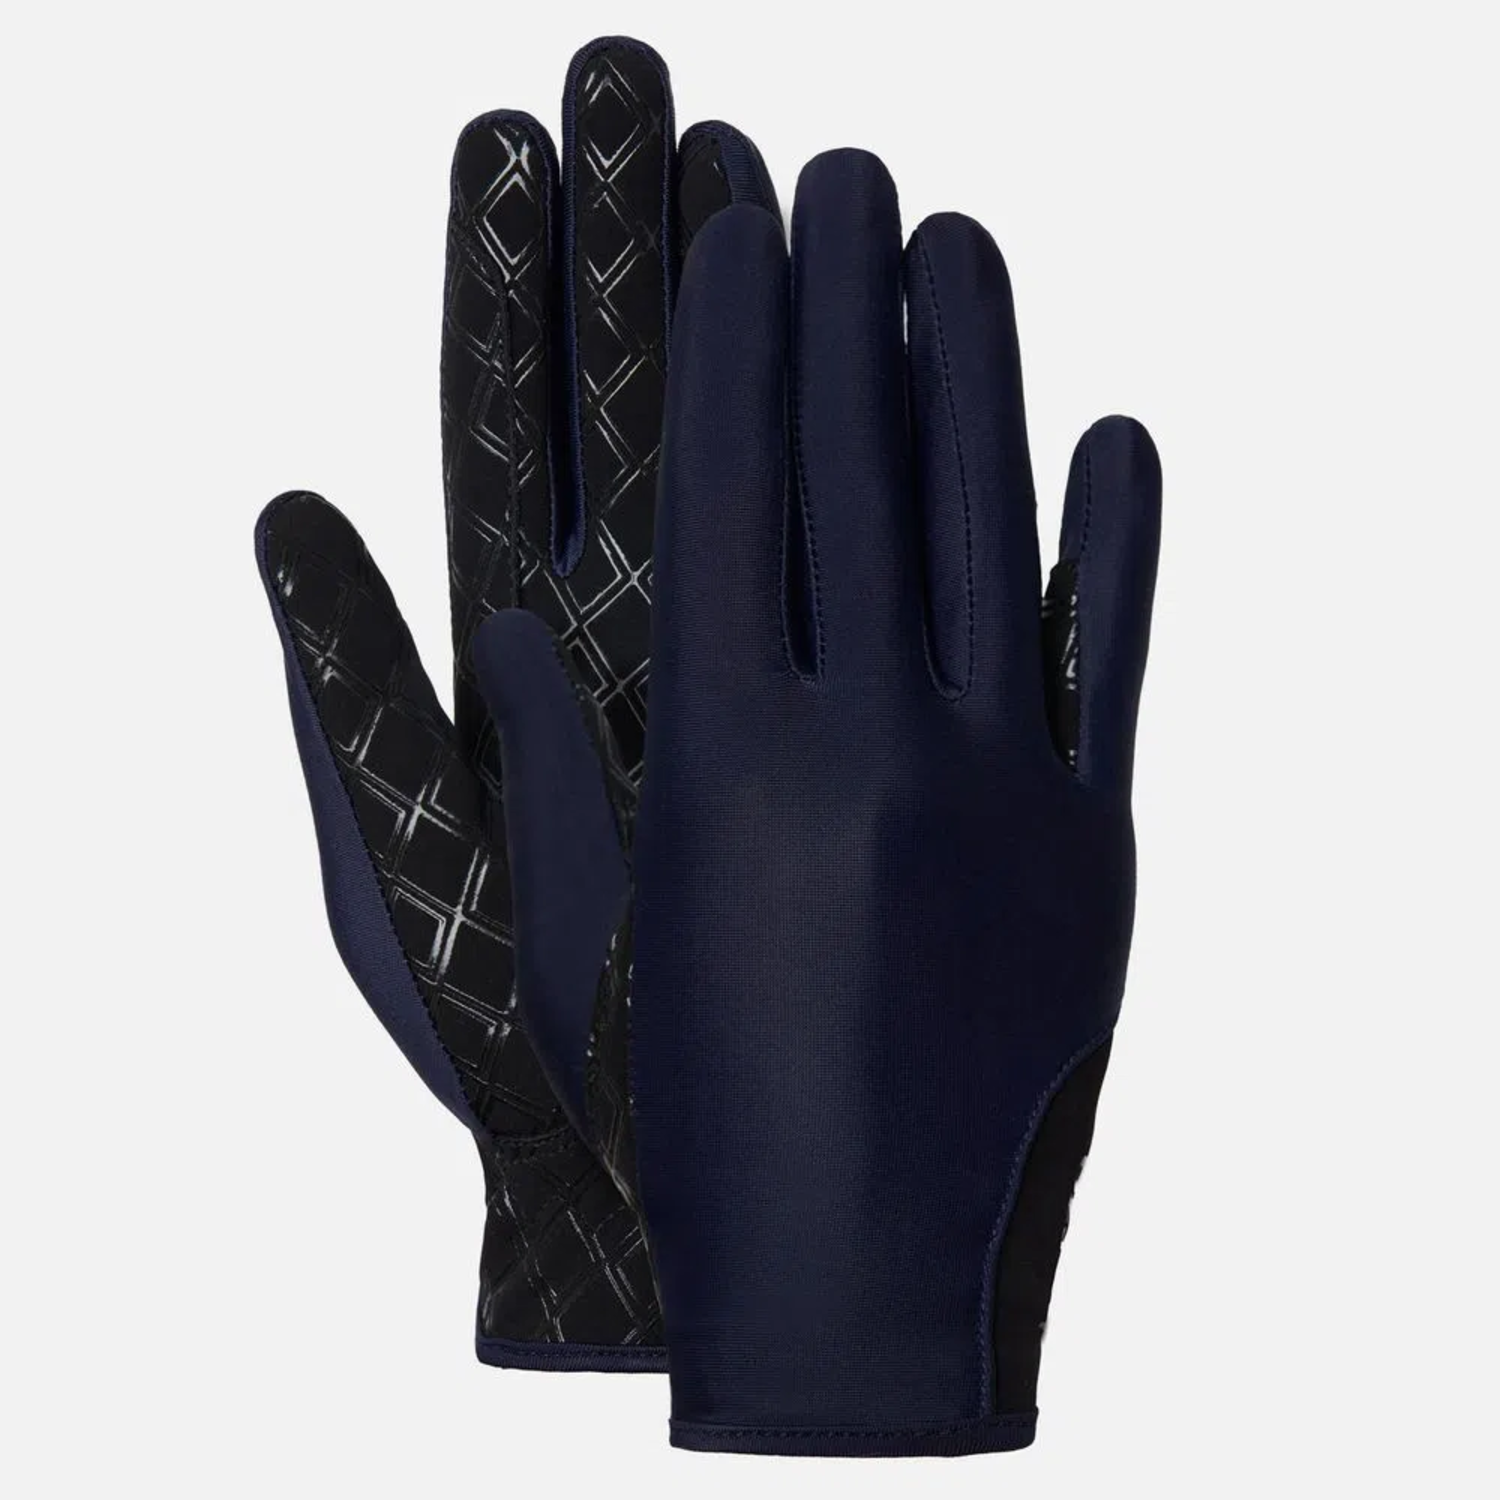 Buy Elan Moulded Gloves For kids Online at Best Prices in India